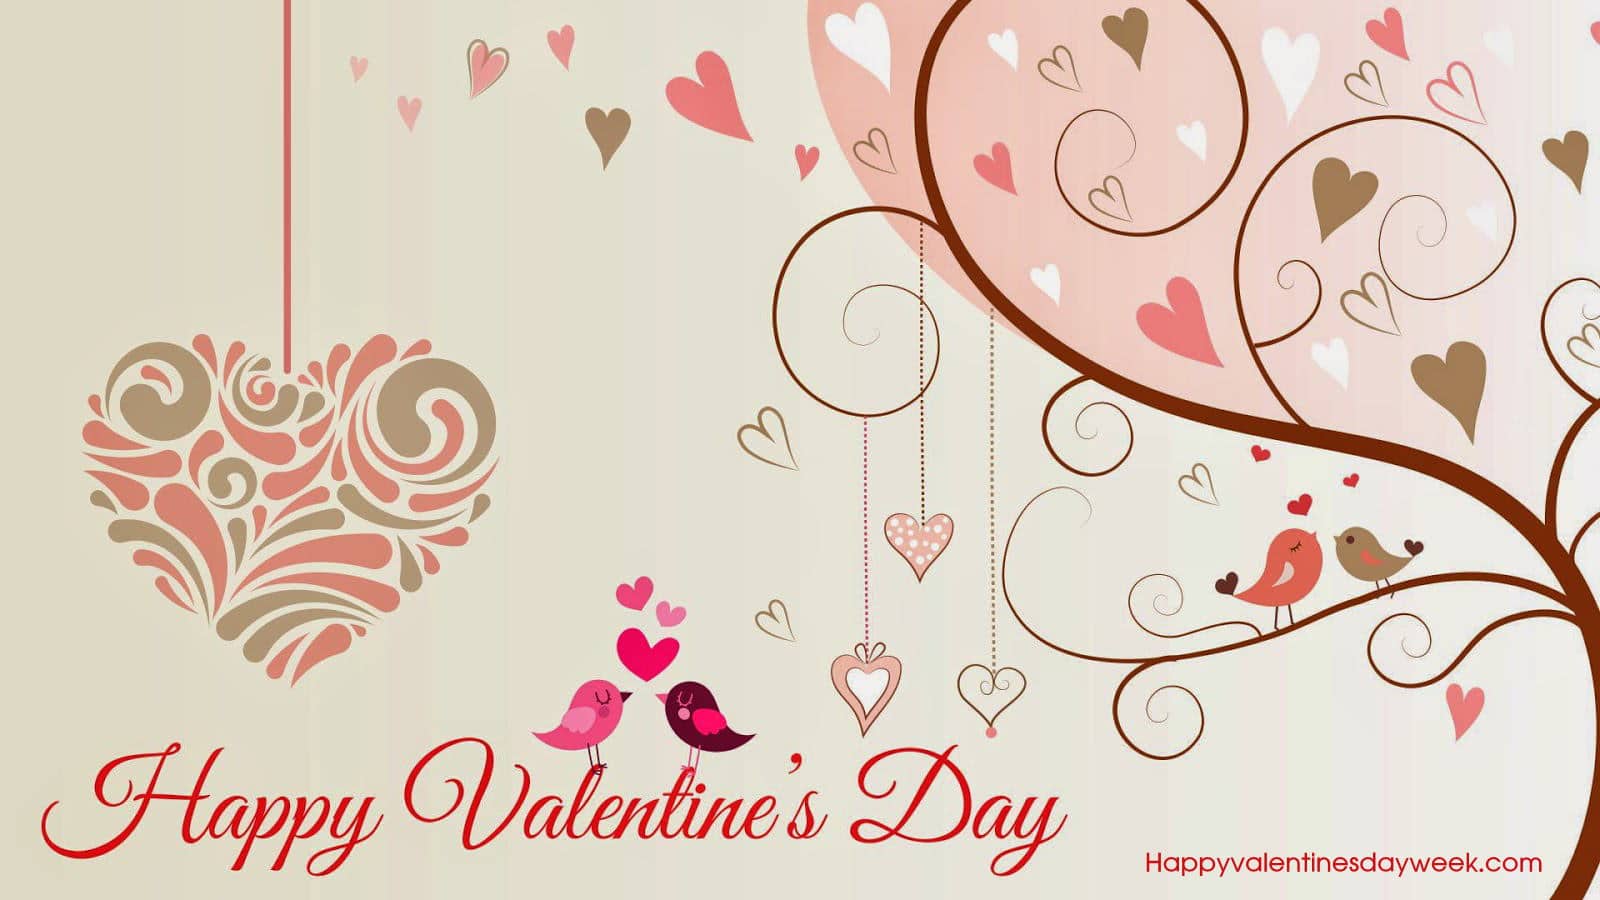 Valentine Day - 14 February 